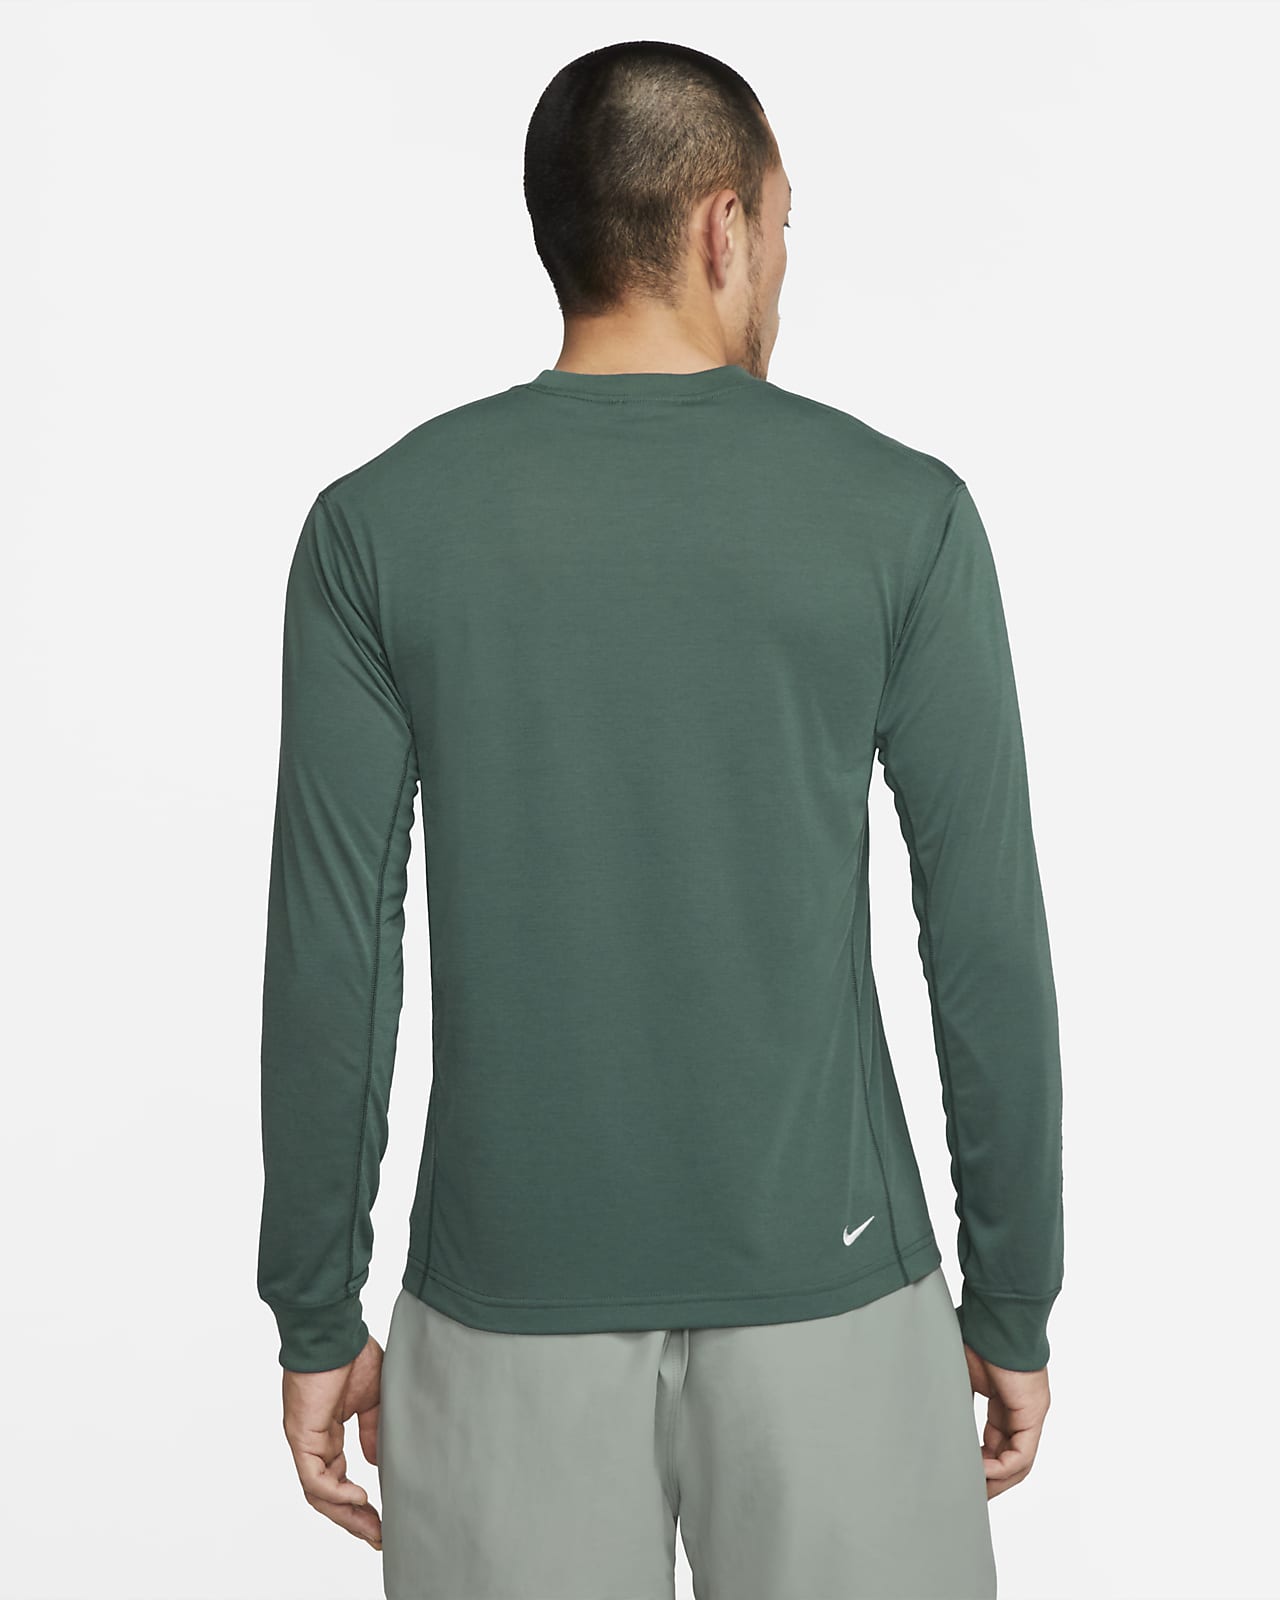 Nike Dri-FIT ACG 'Goat Rocks' Men's Long-Sleeve Top. Nike PH